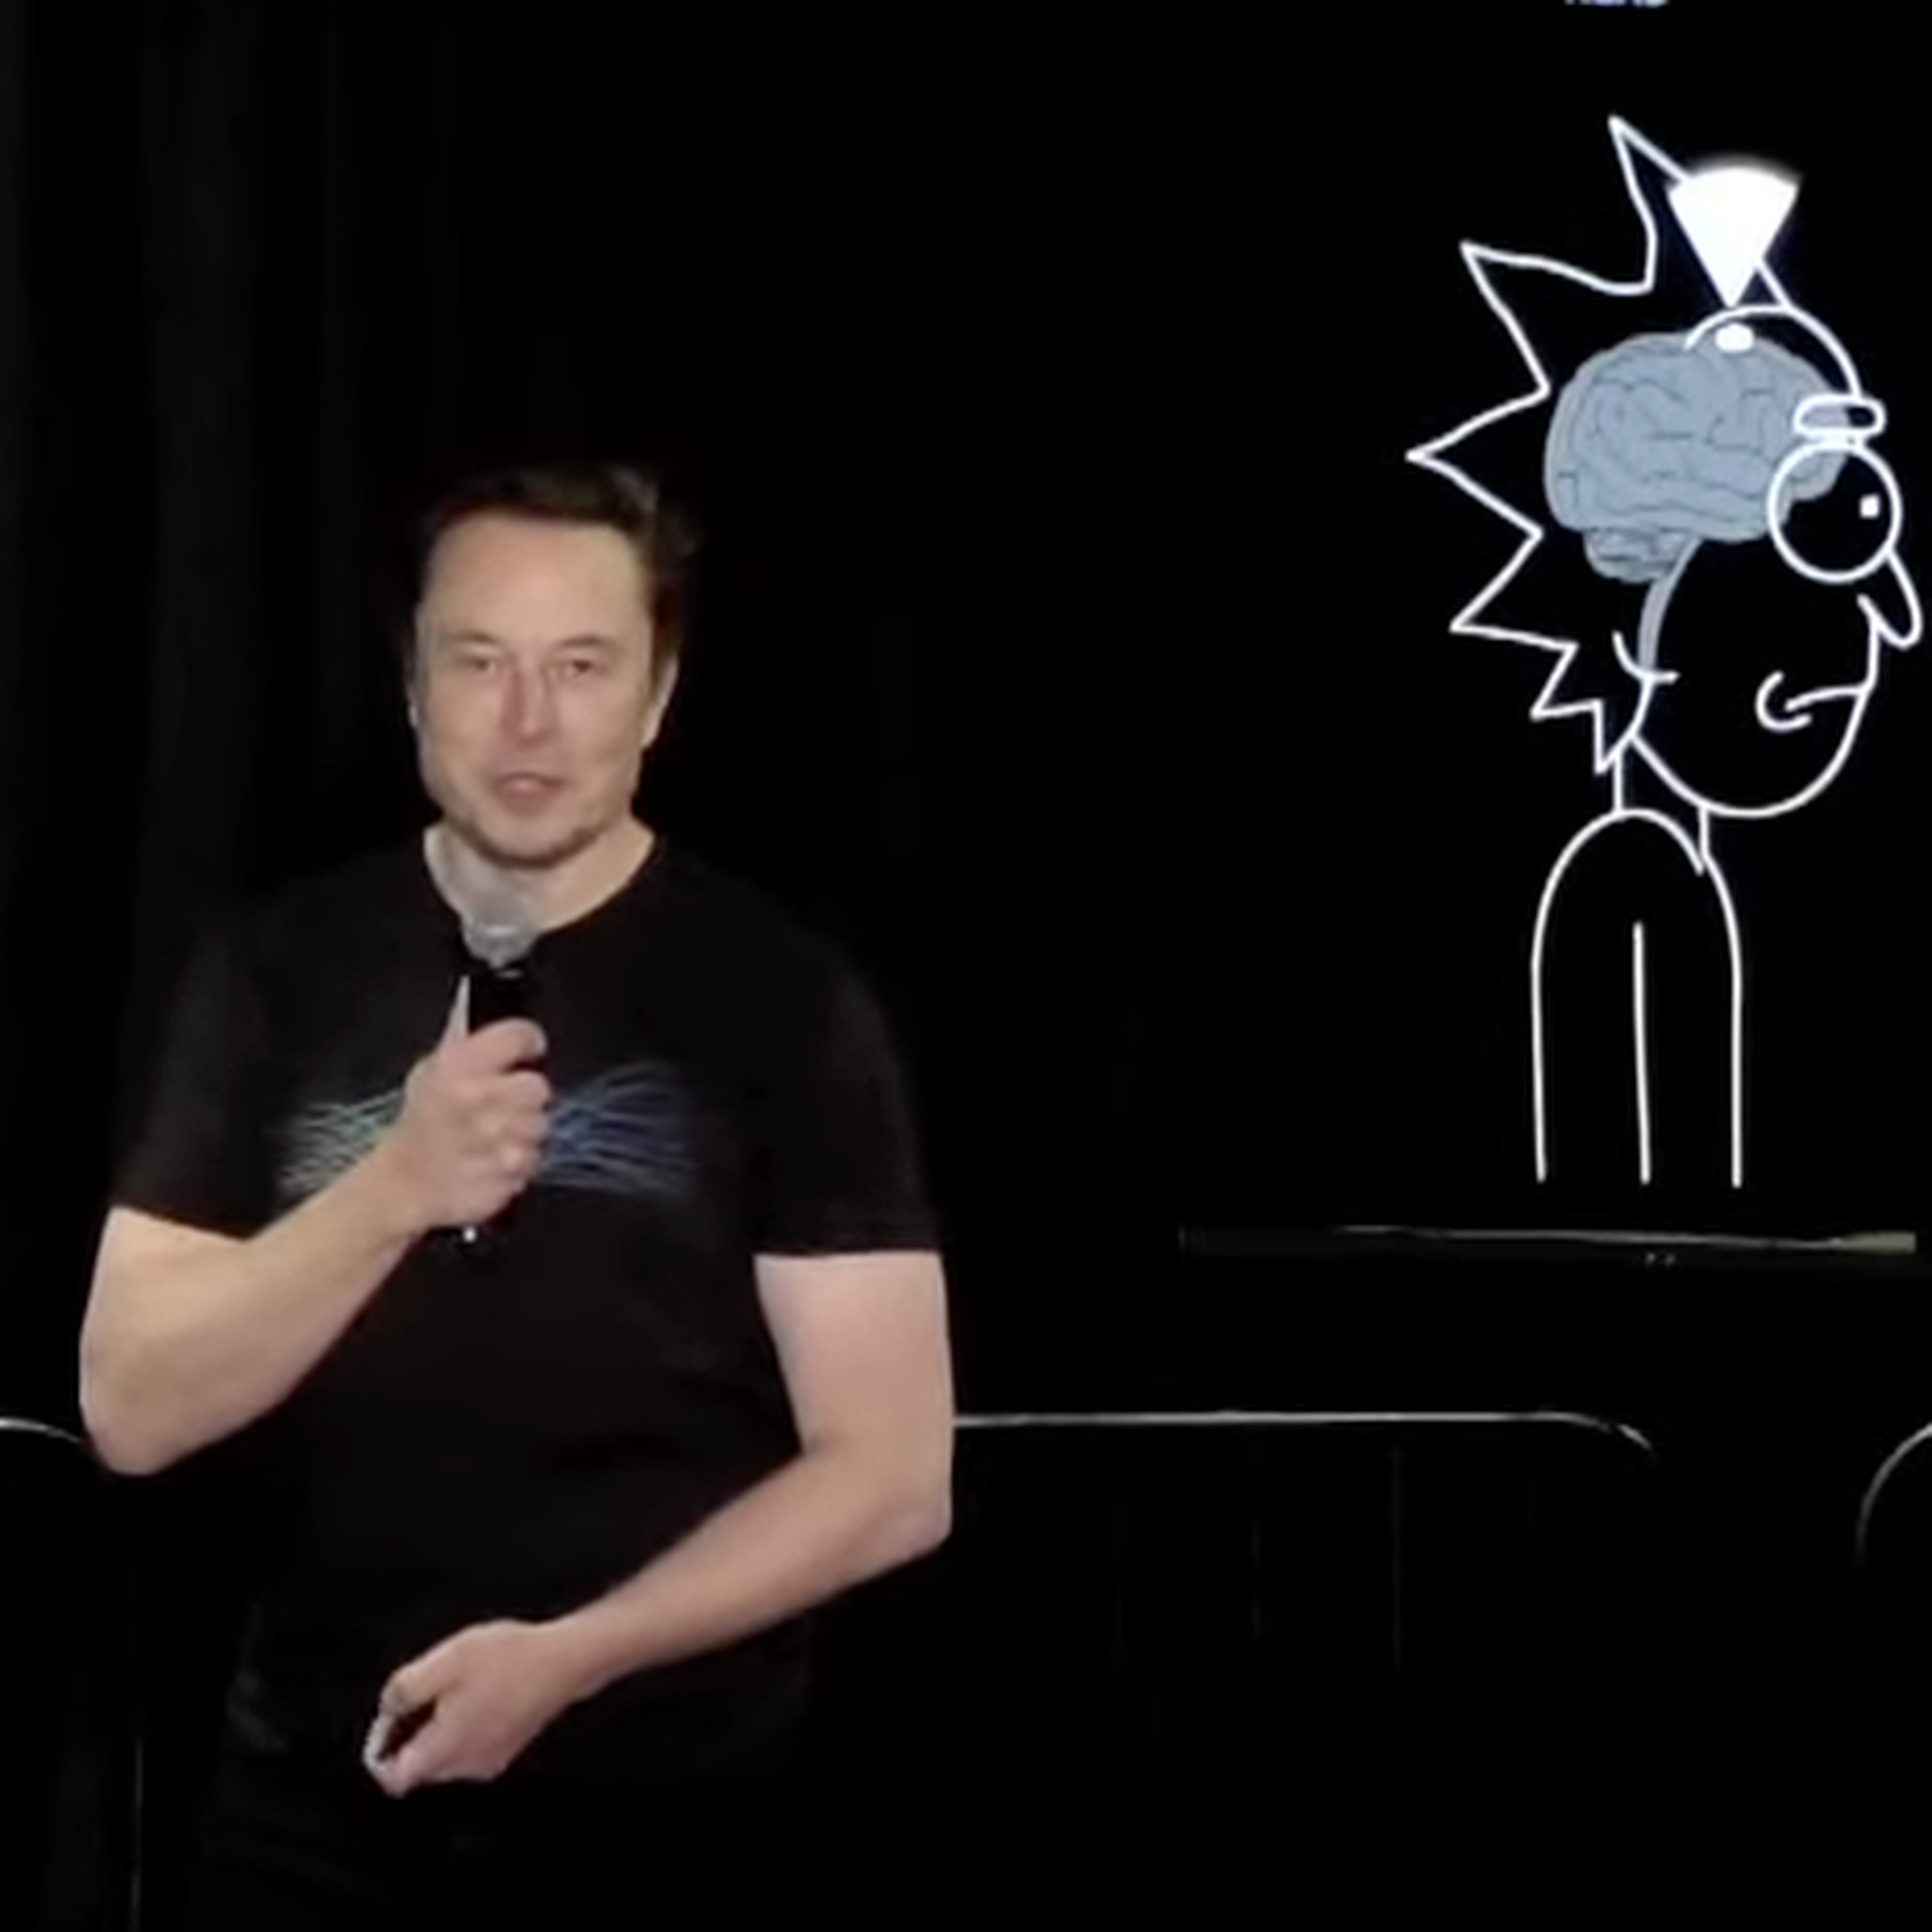 Elon Musk speaking at the Neauralink 2022 event